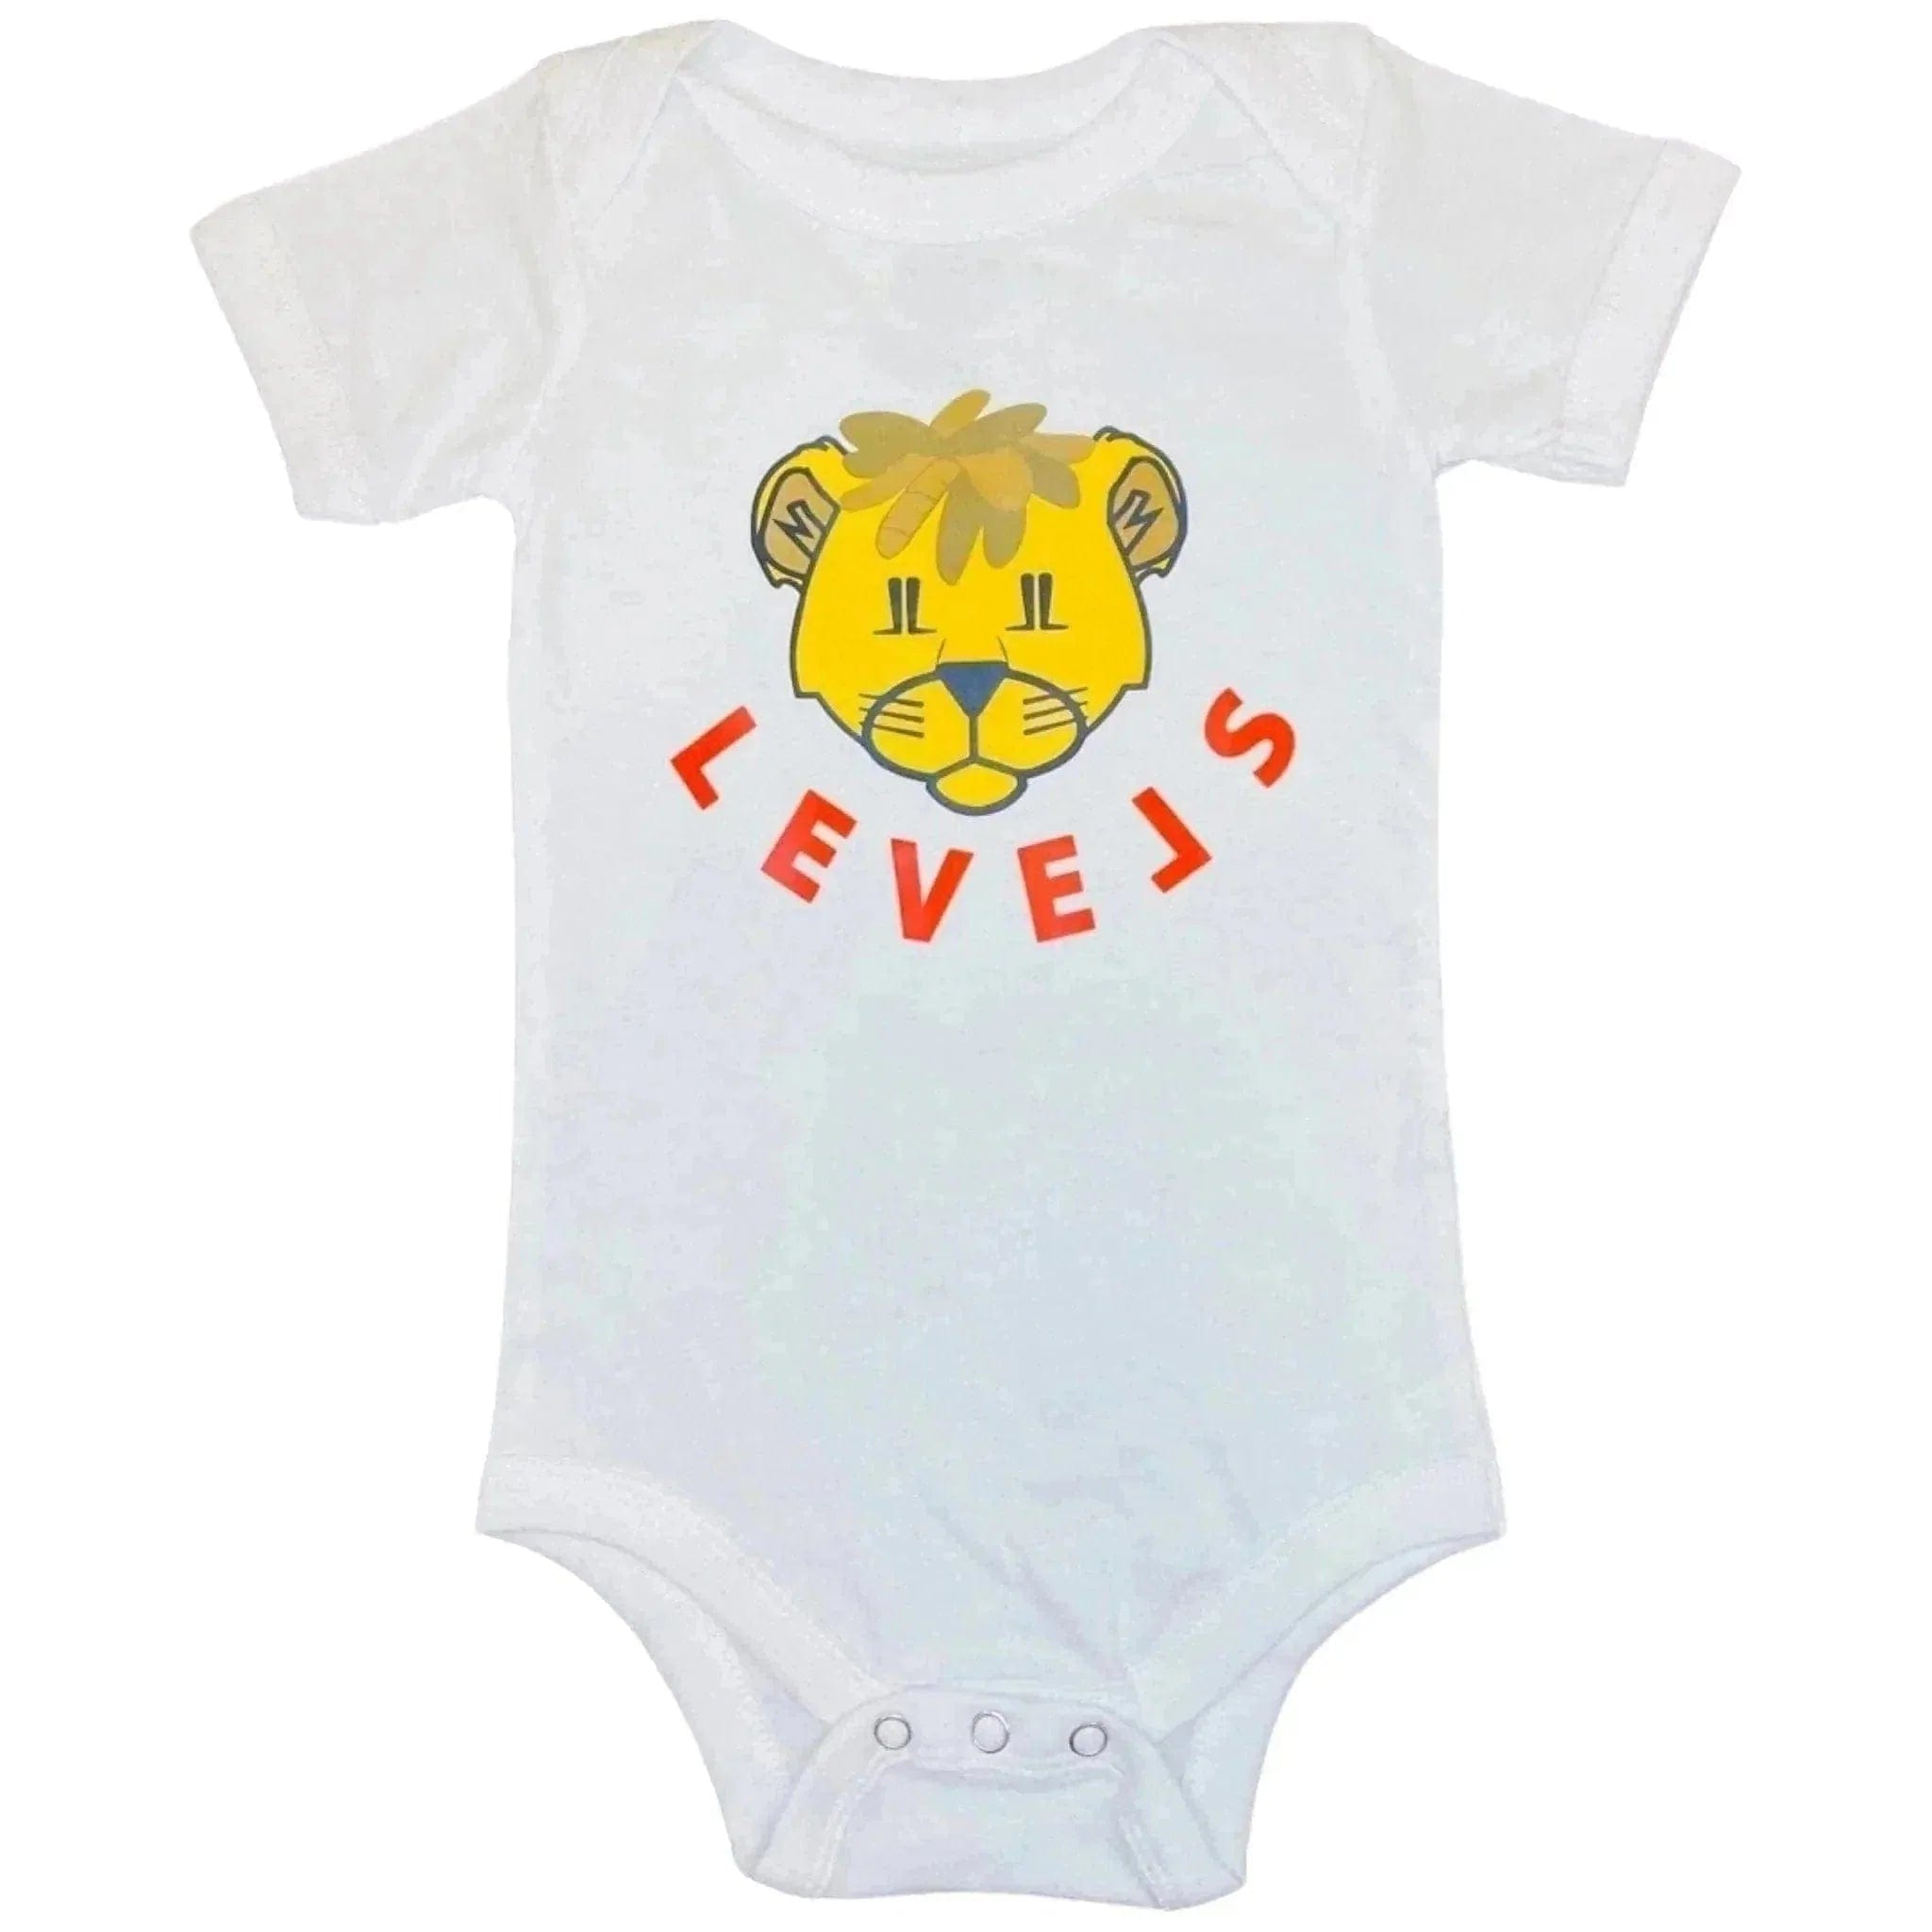 LEVELS, LLC Baby & Toddler Little Face Onesie (White)